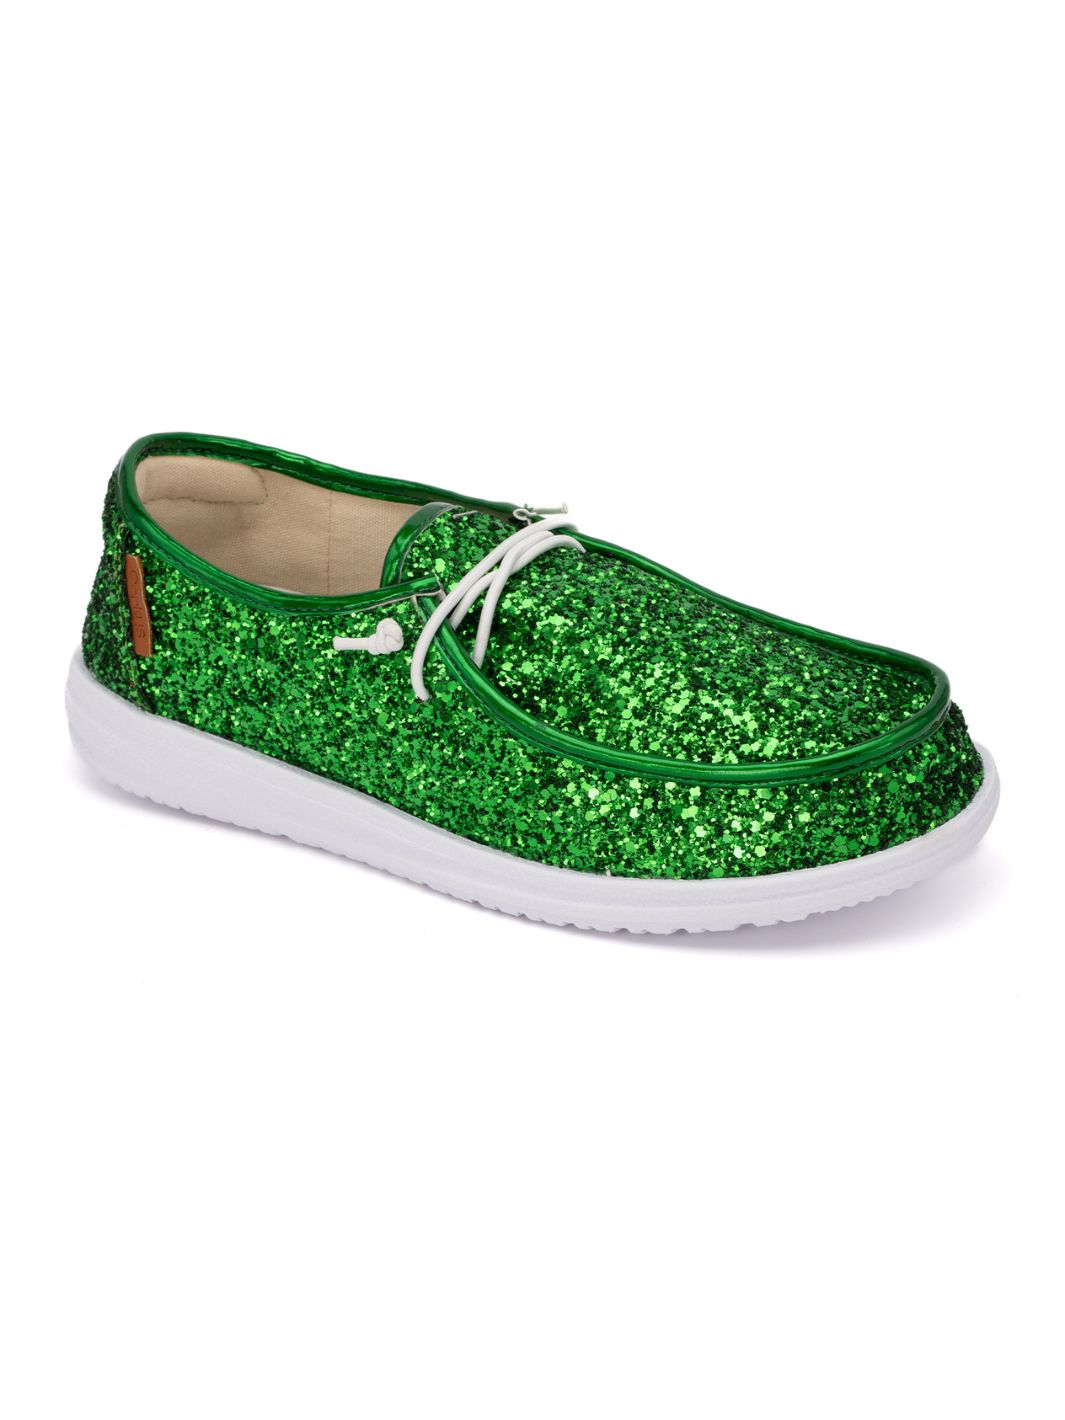 Kayak Green Glitter